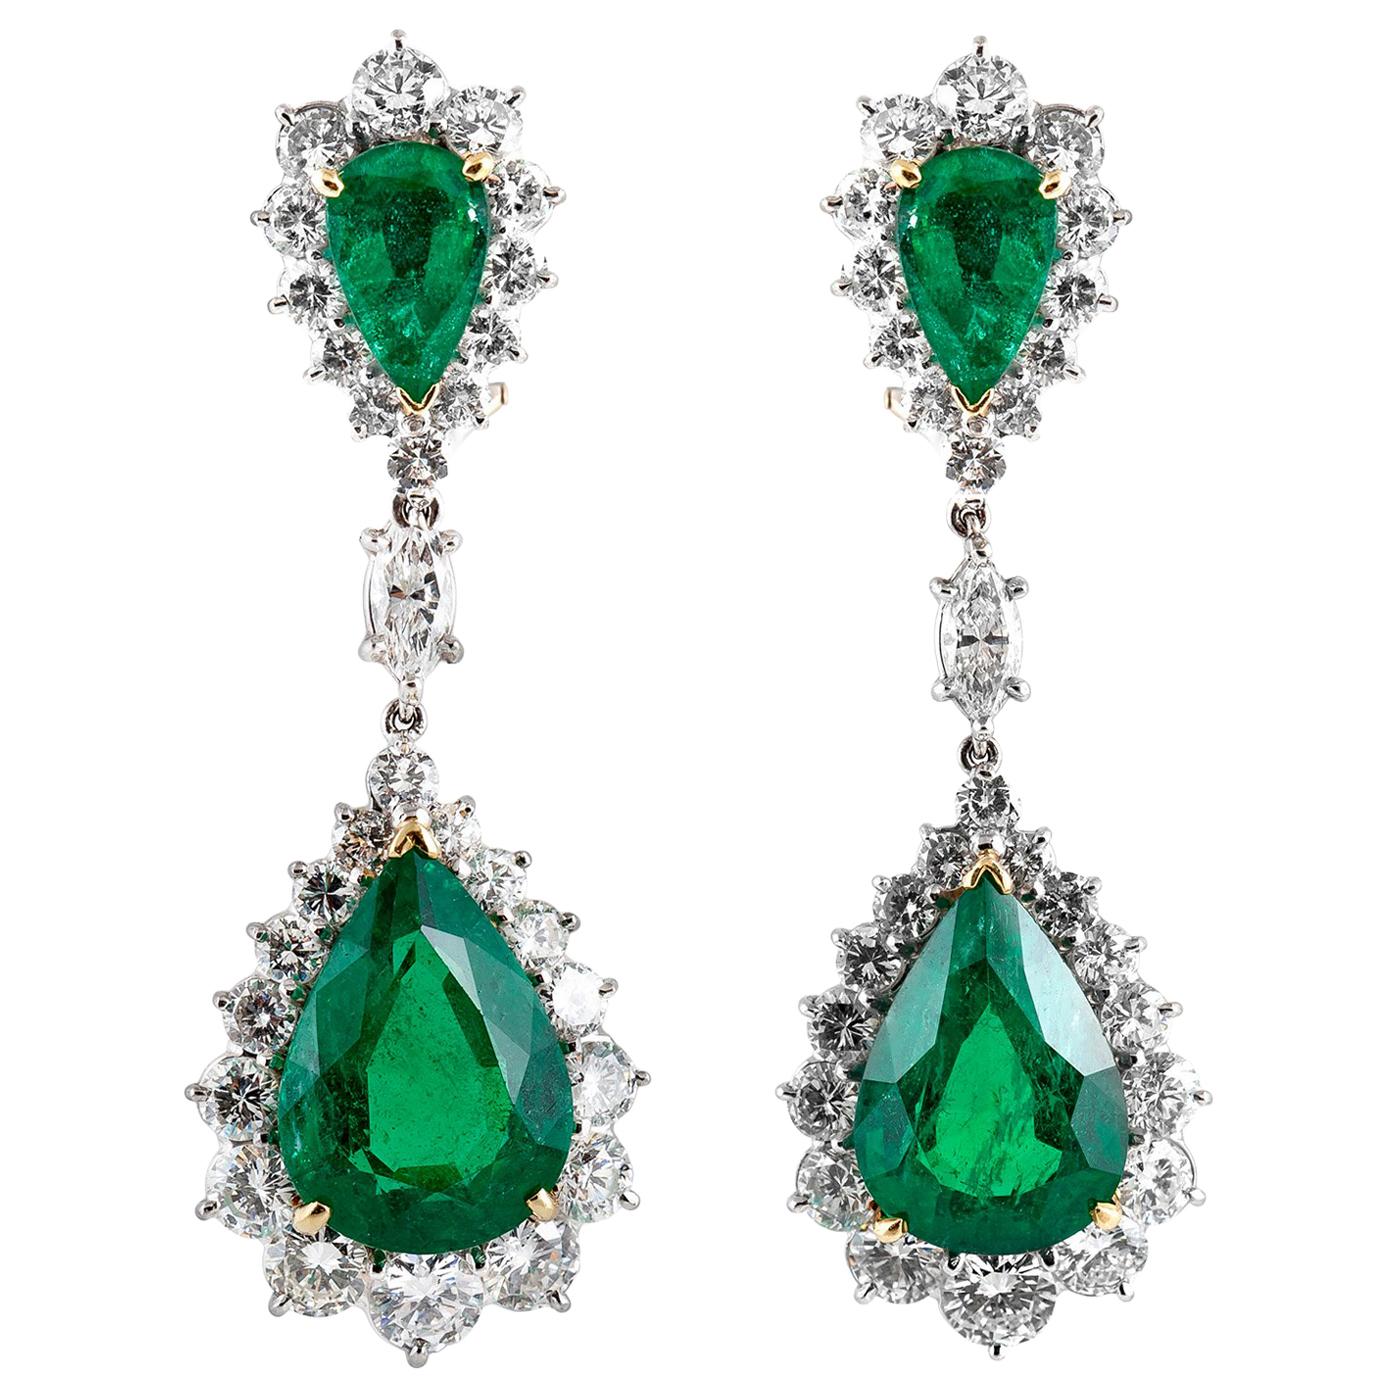 16.02 Carat Pear-Shaped Emerald Dangle Earrings with Diamonds